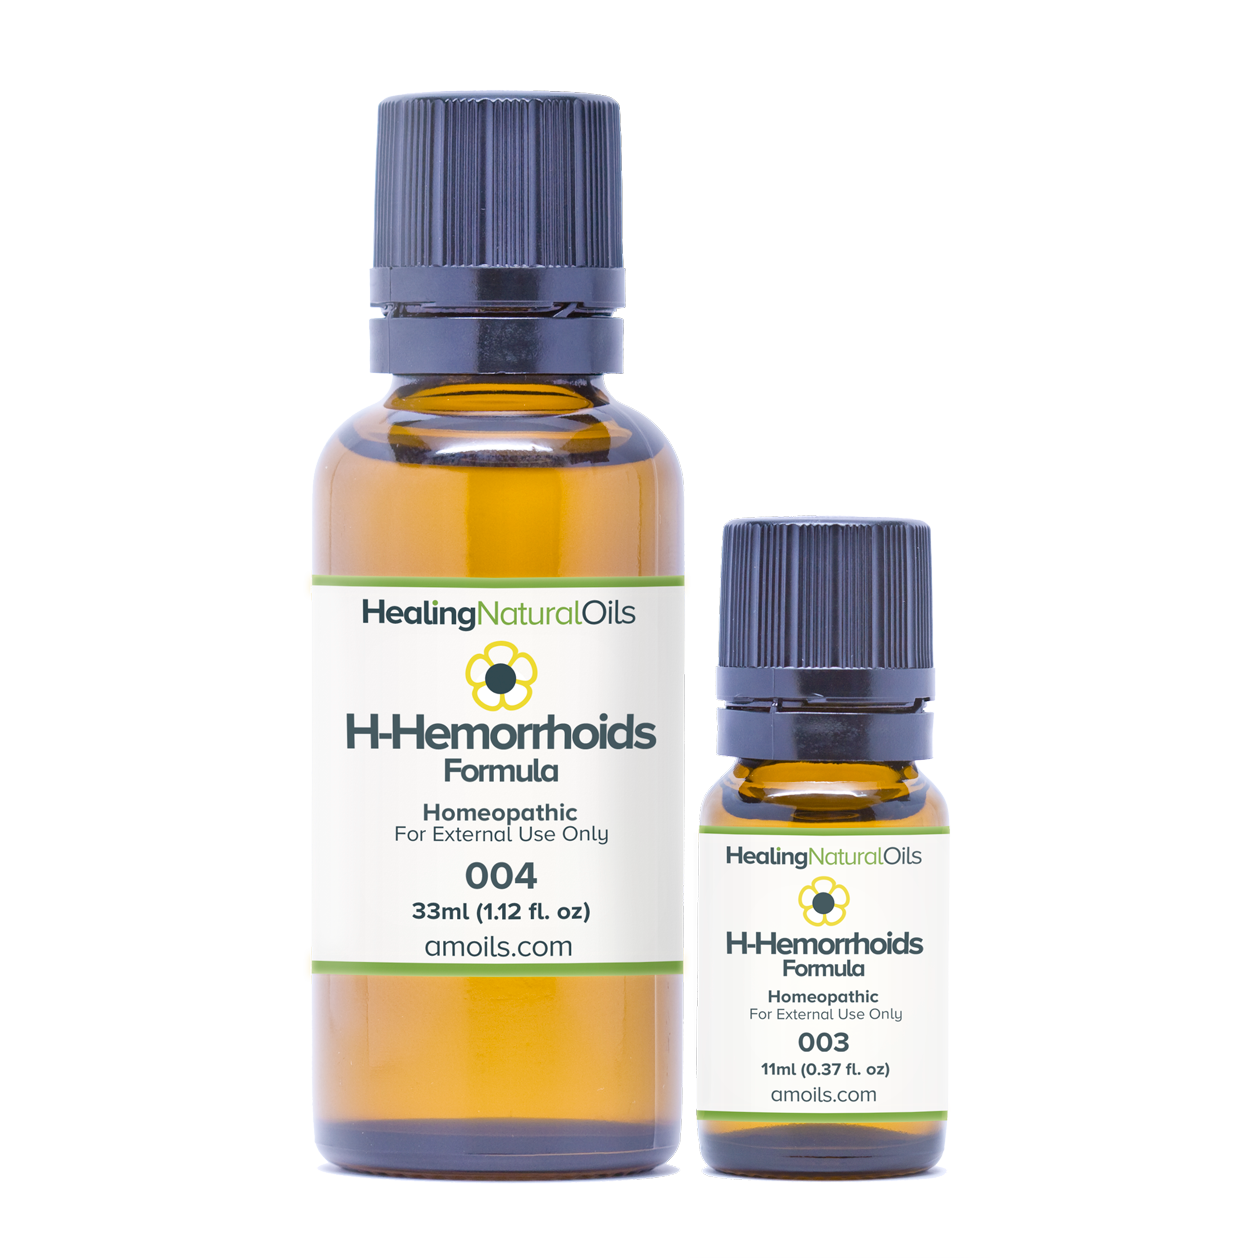 H-Hemorrhoids Formula